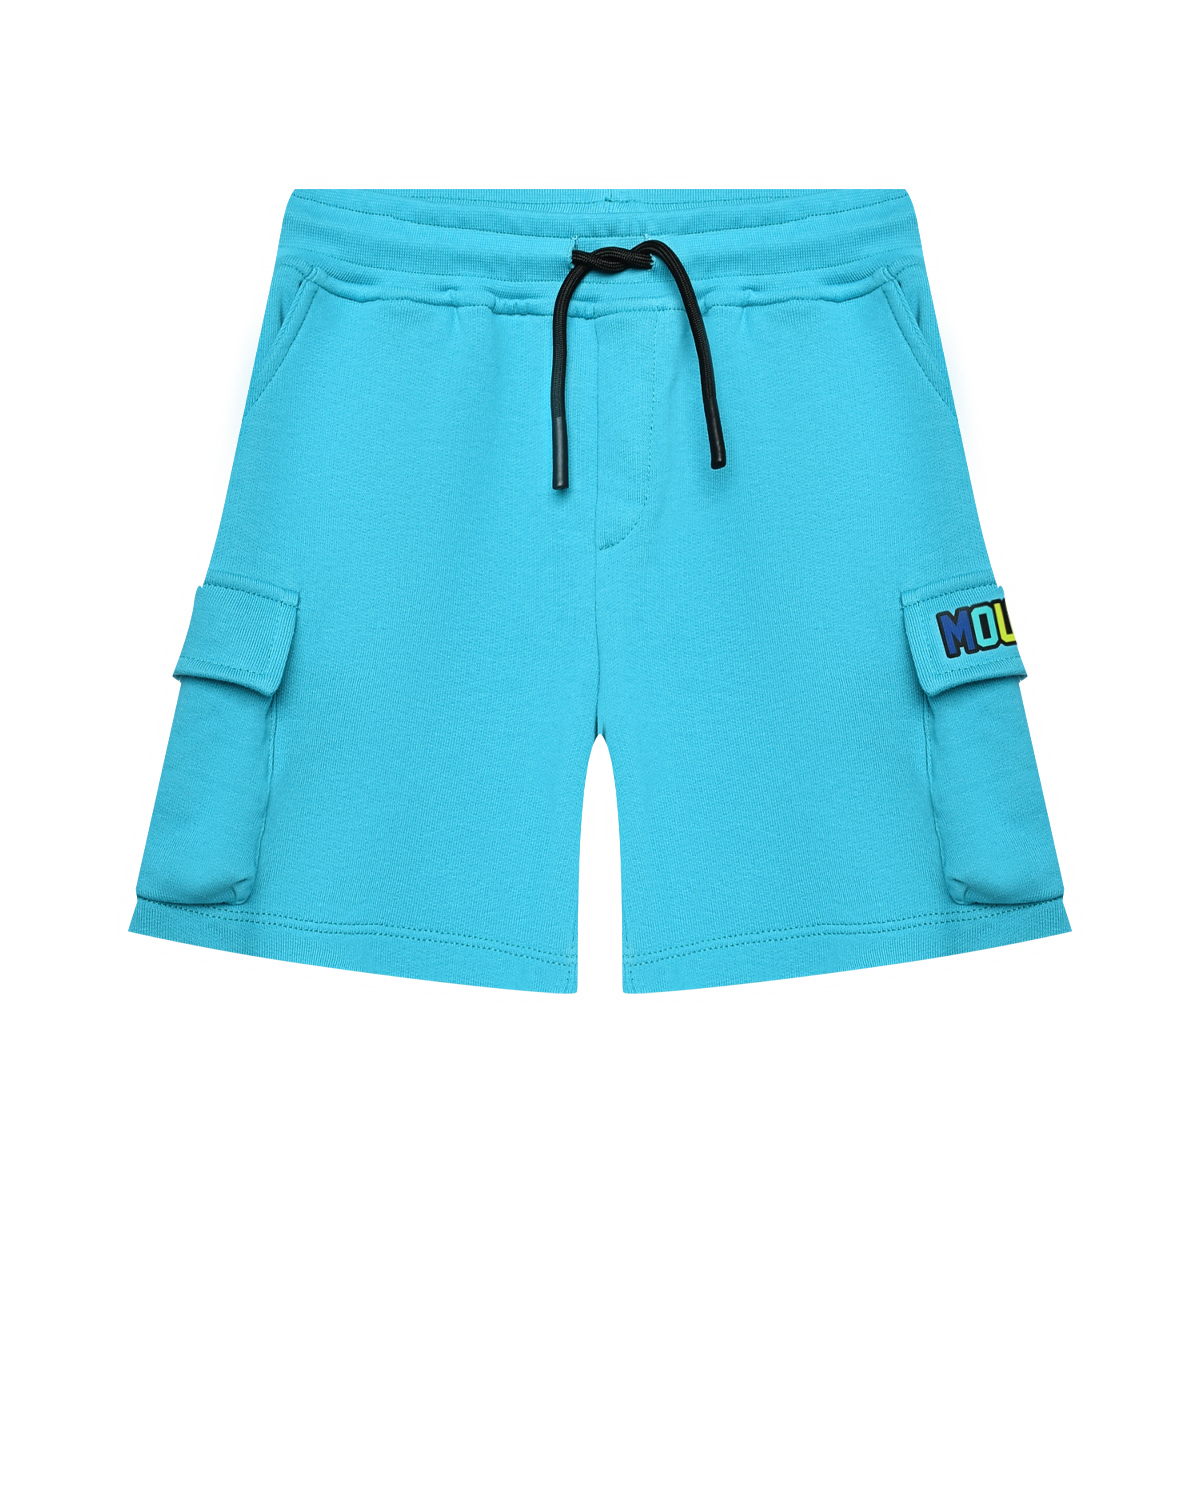 Бермуды с карманами-карго, голубые Mousse kids, размер 104, цвет нет цвета